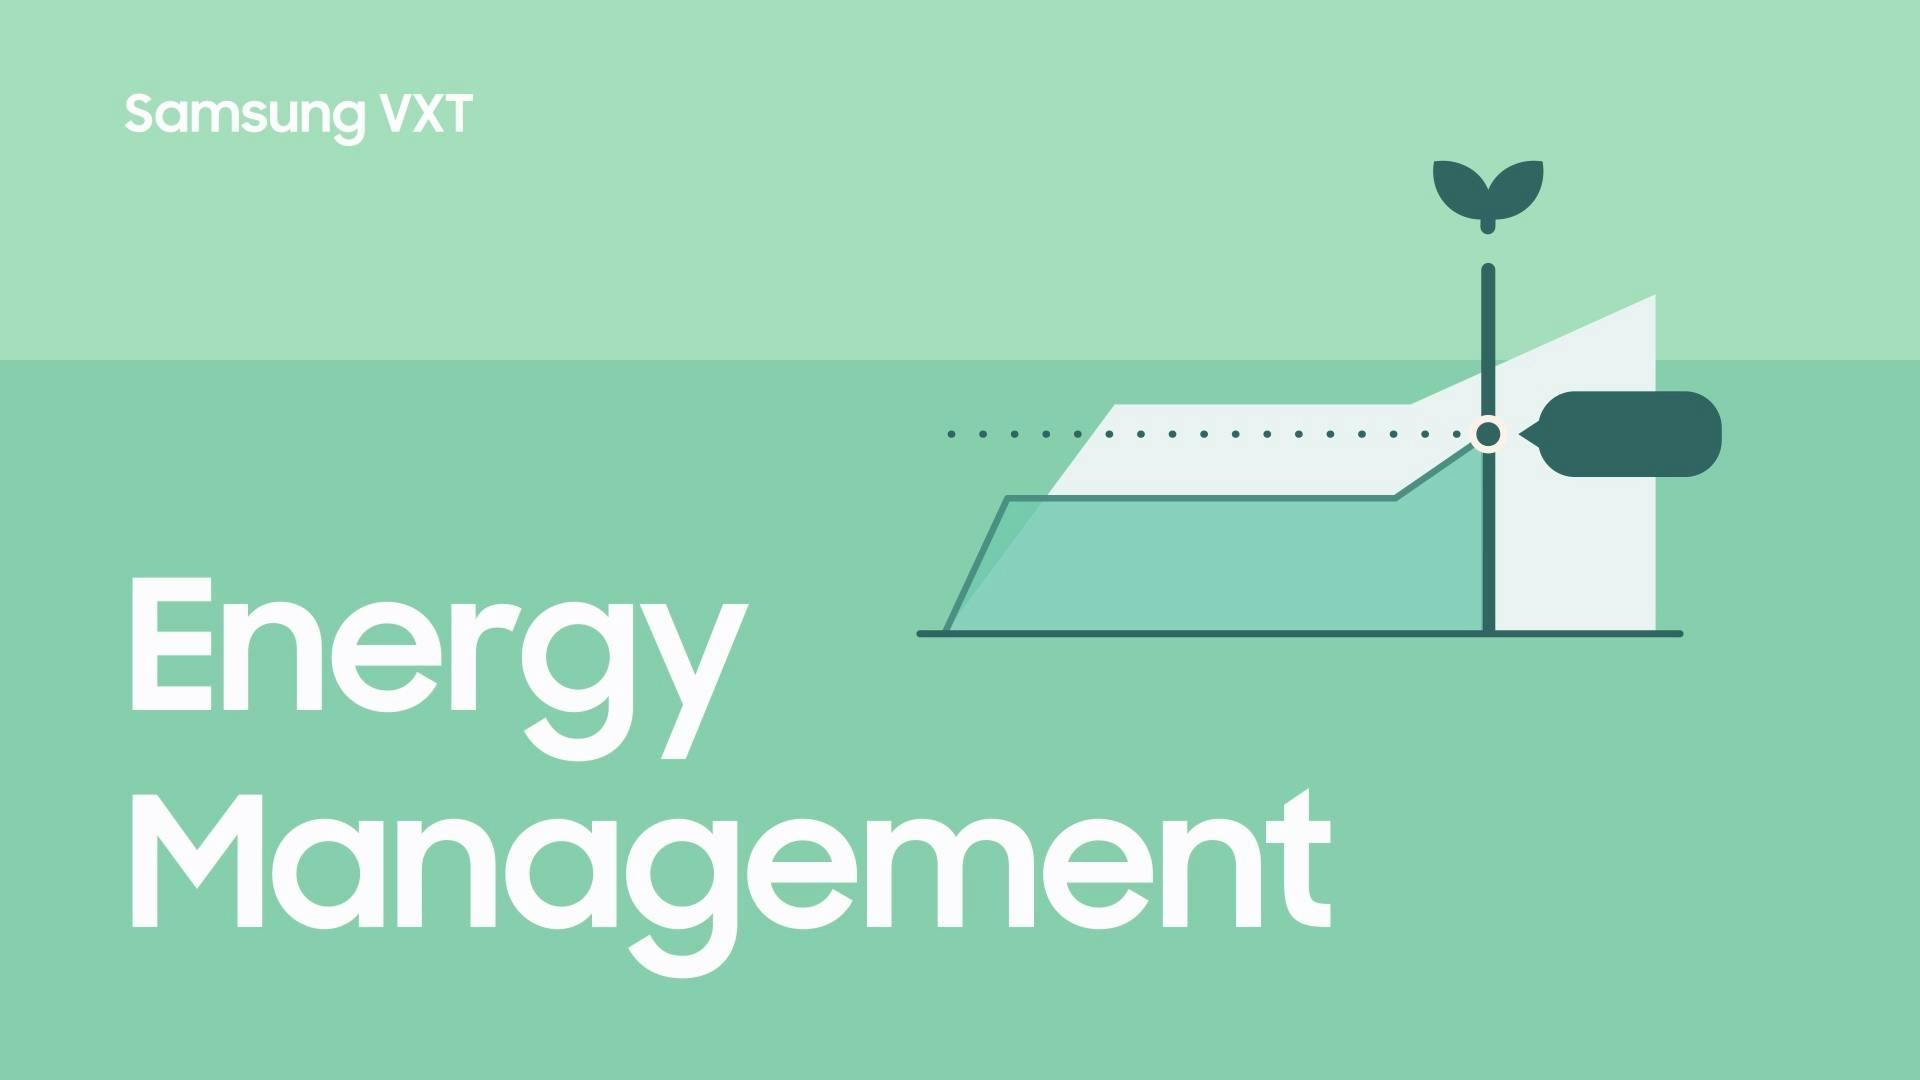 Energy management feature of the Samsung VXT digital signage cloud solution